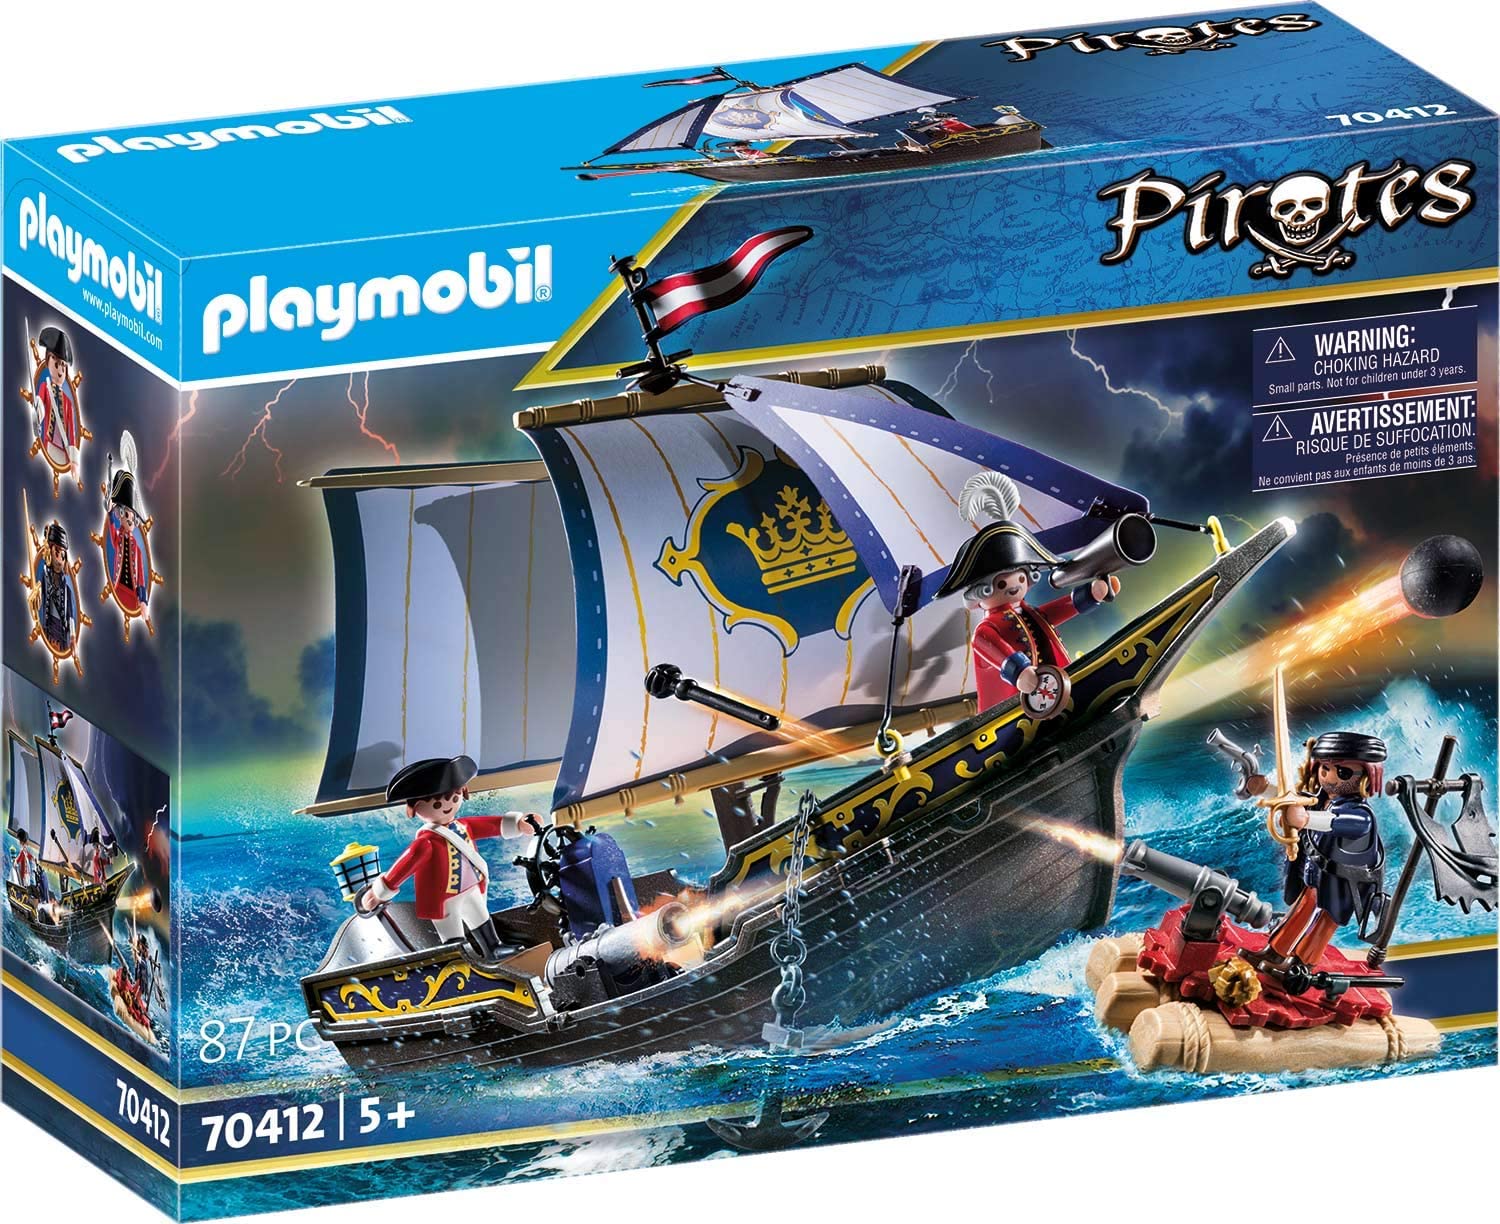 Playmobil Pirates 70412 Red Coat Sailors Age 5 Years +